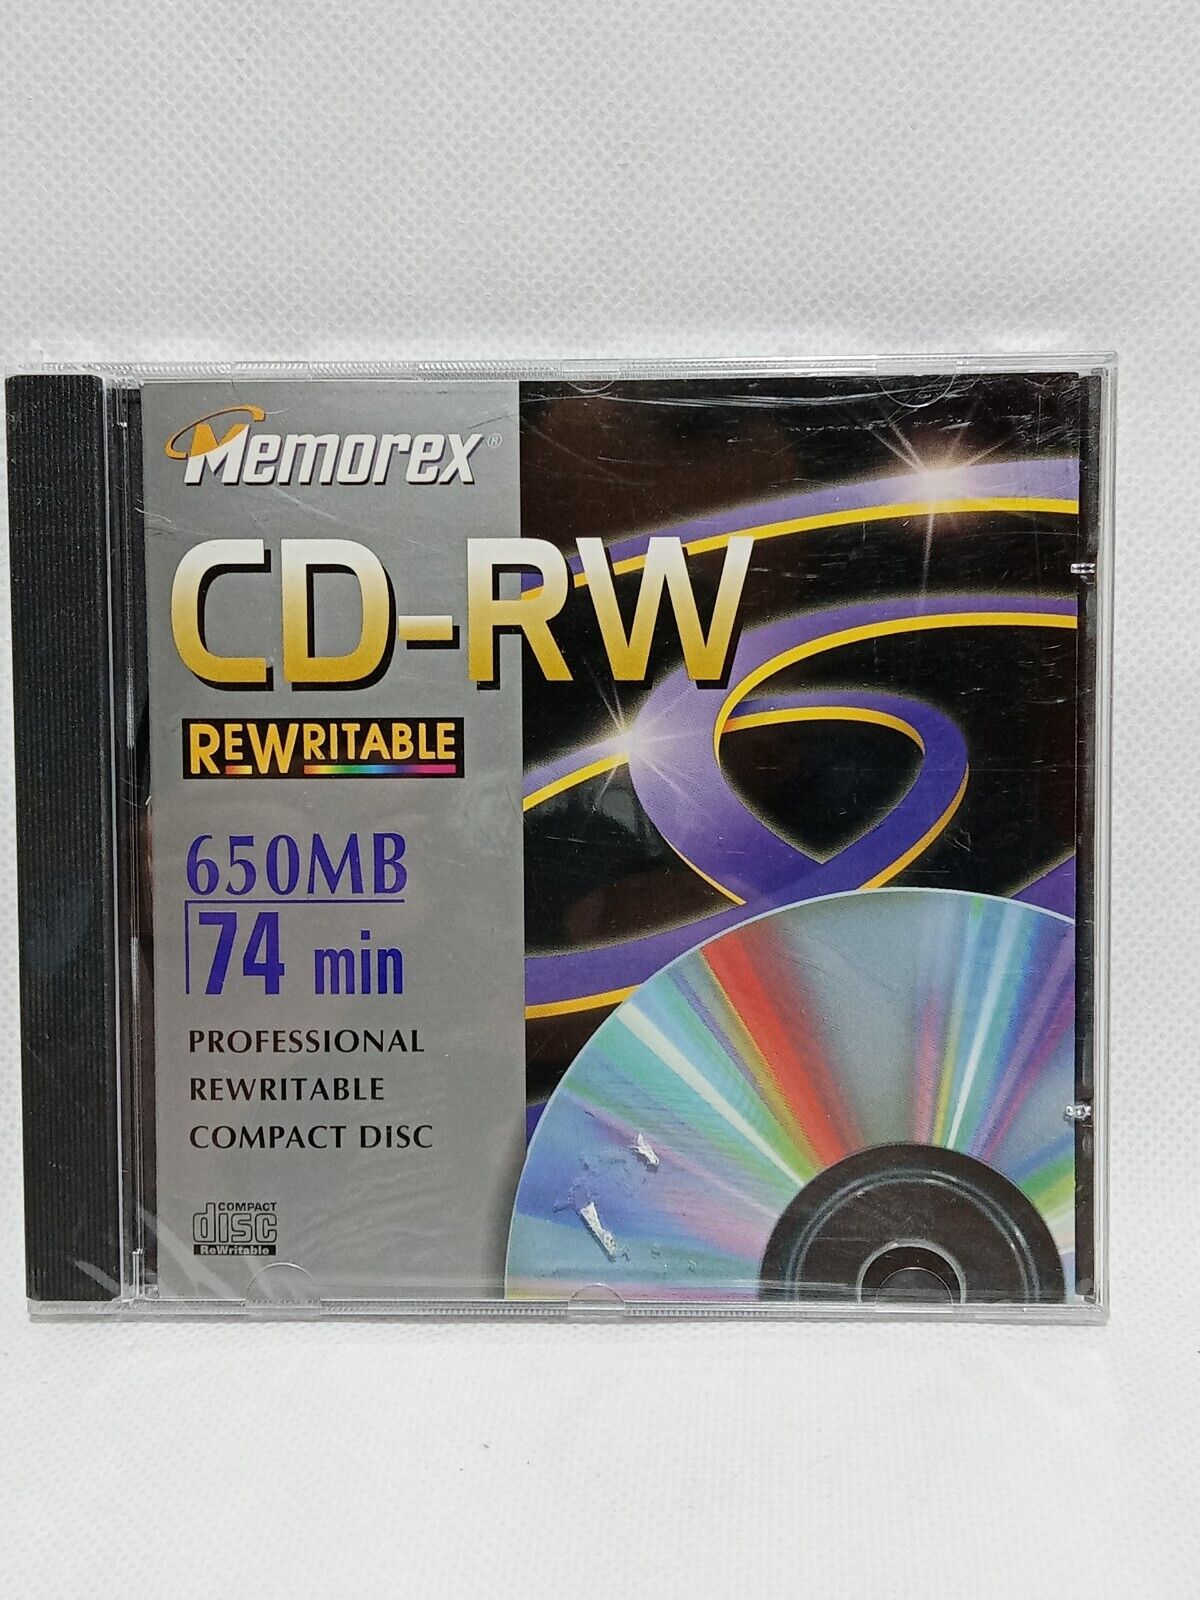 Vintage Memorex CD-RW 650MB 74 min Professional Rewritable Compact Discs